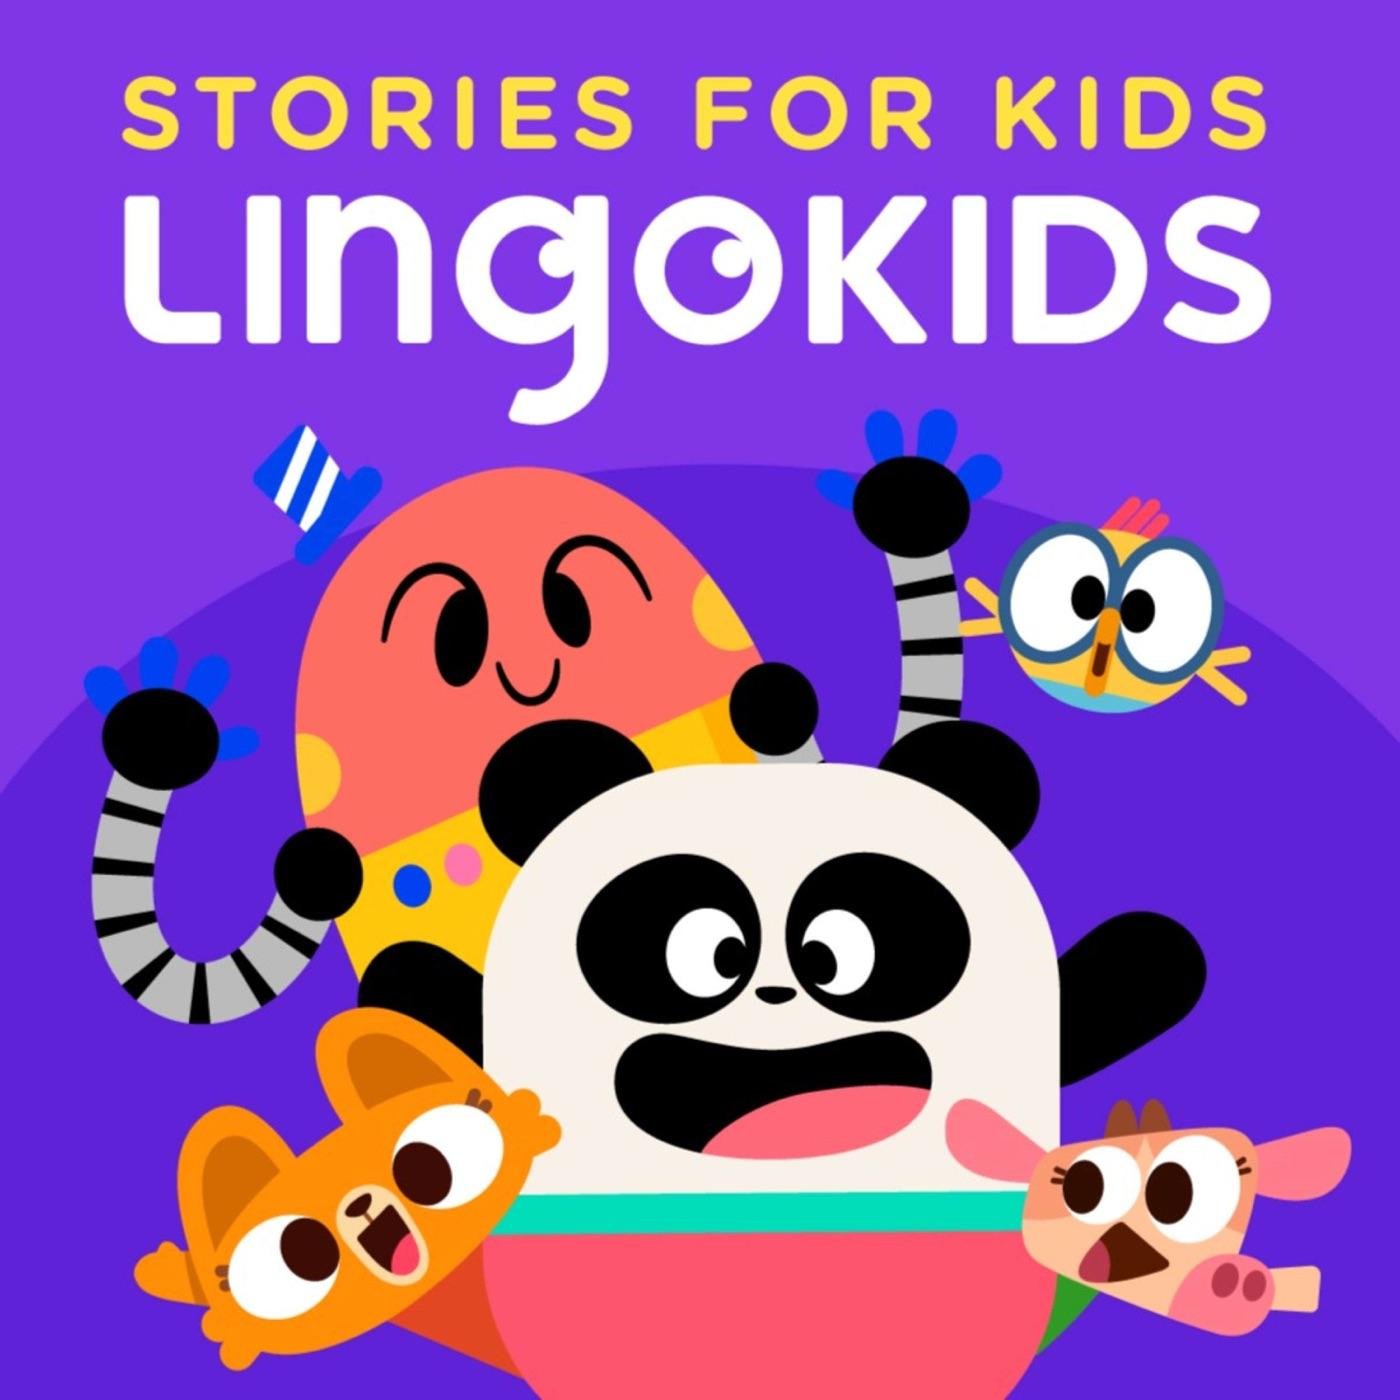 lingokids-stories-for-kids-lingokids-Pk2ZxN3Iz8u-ibGI6tJ1mO8.1400x1400 (1).jpg